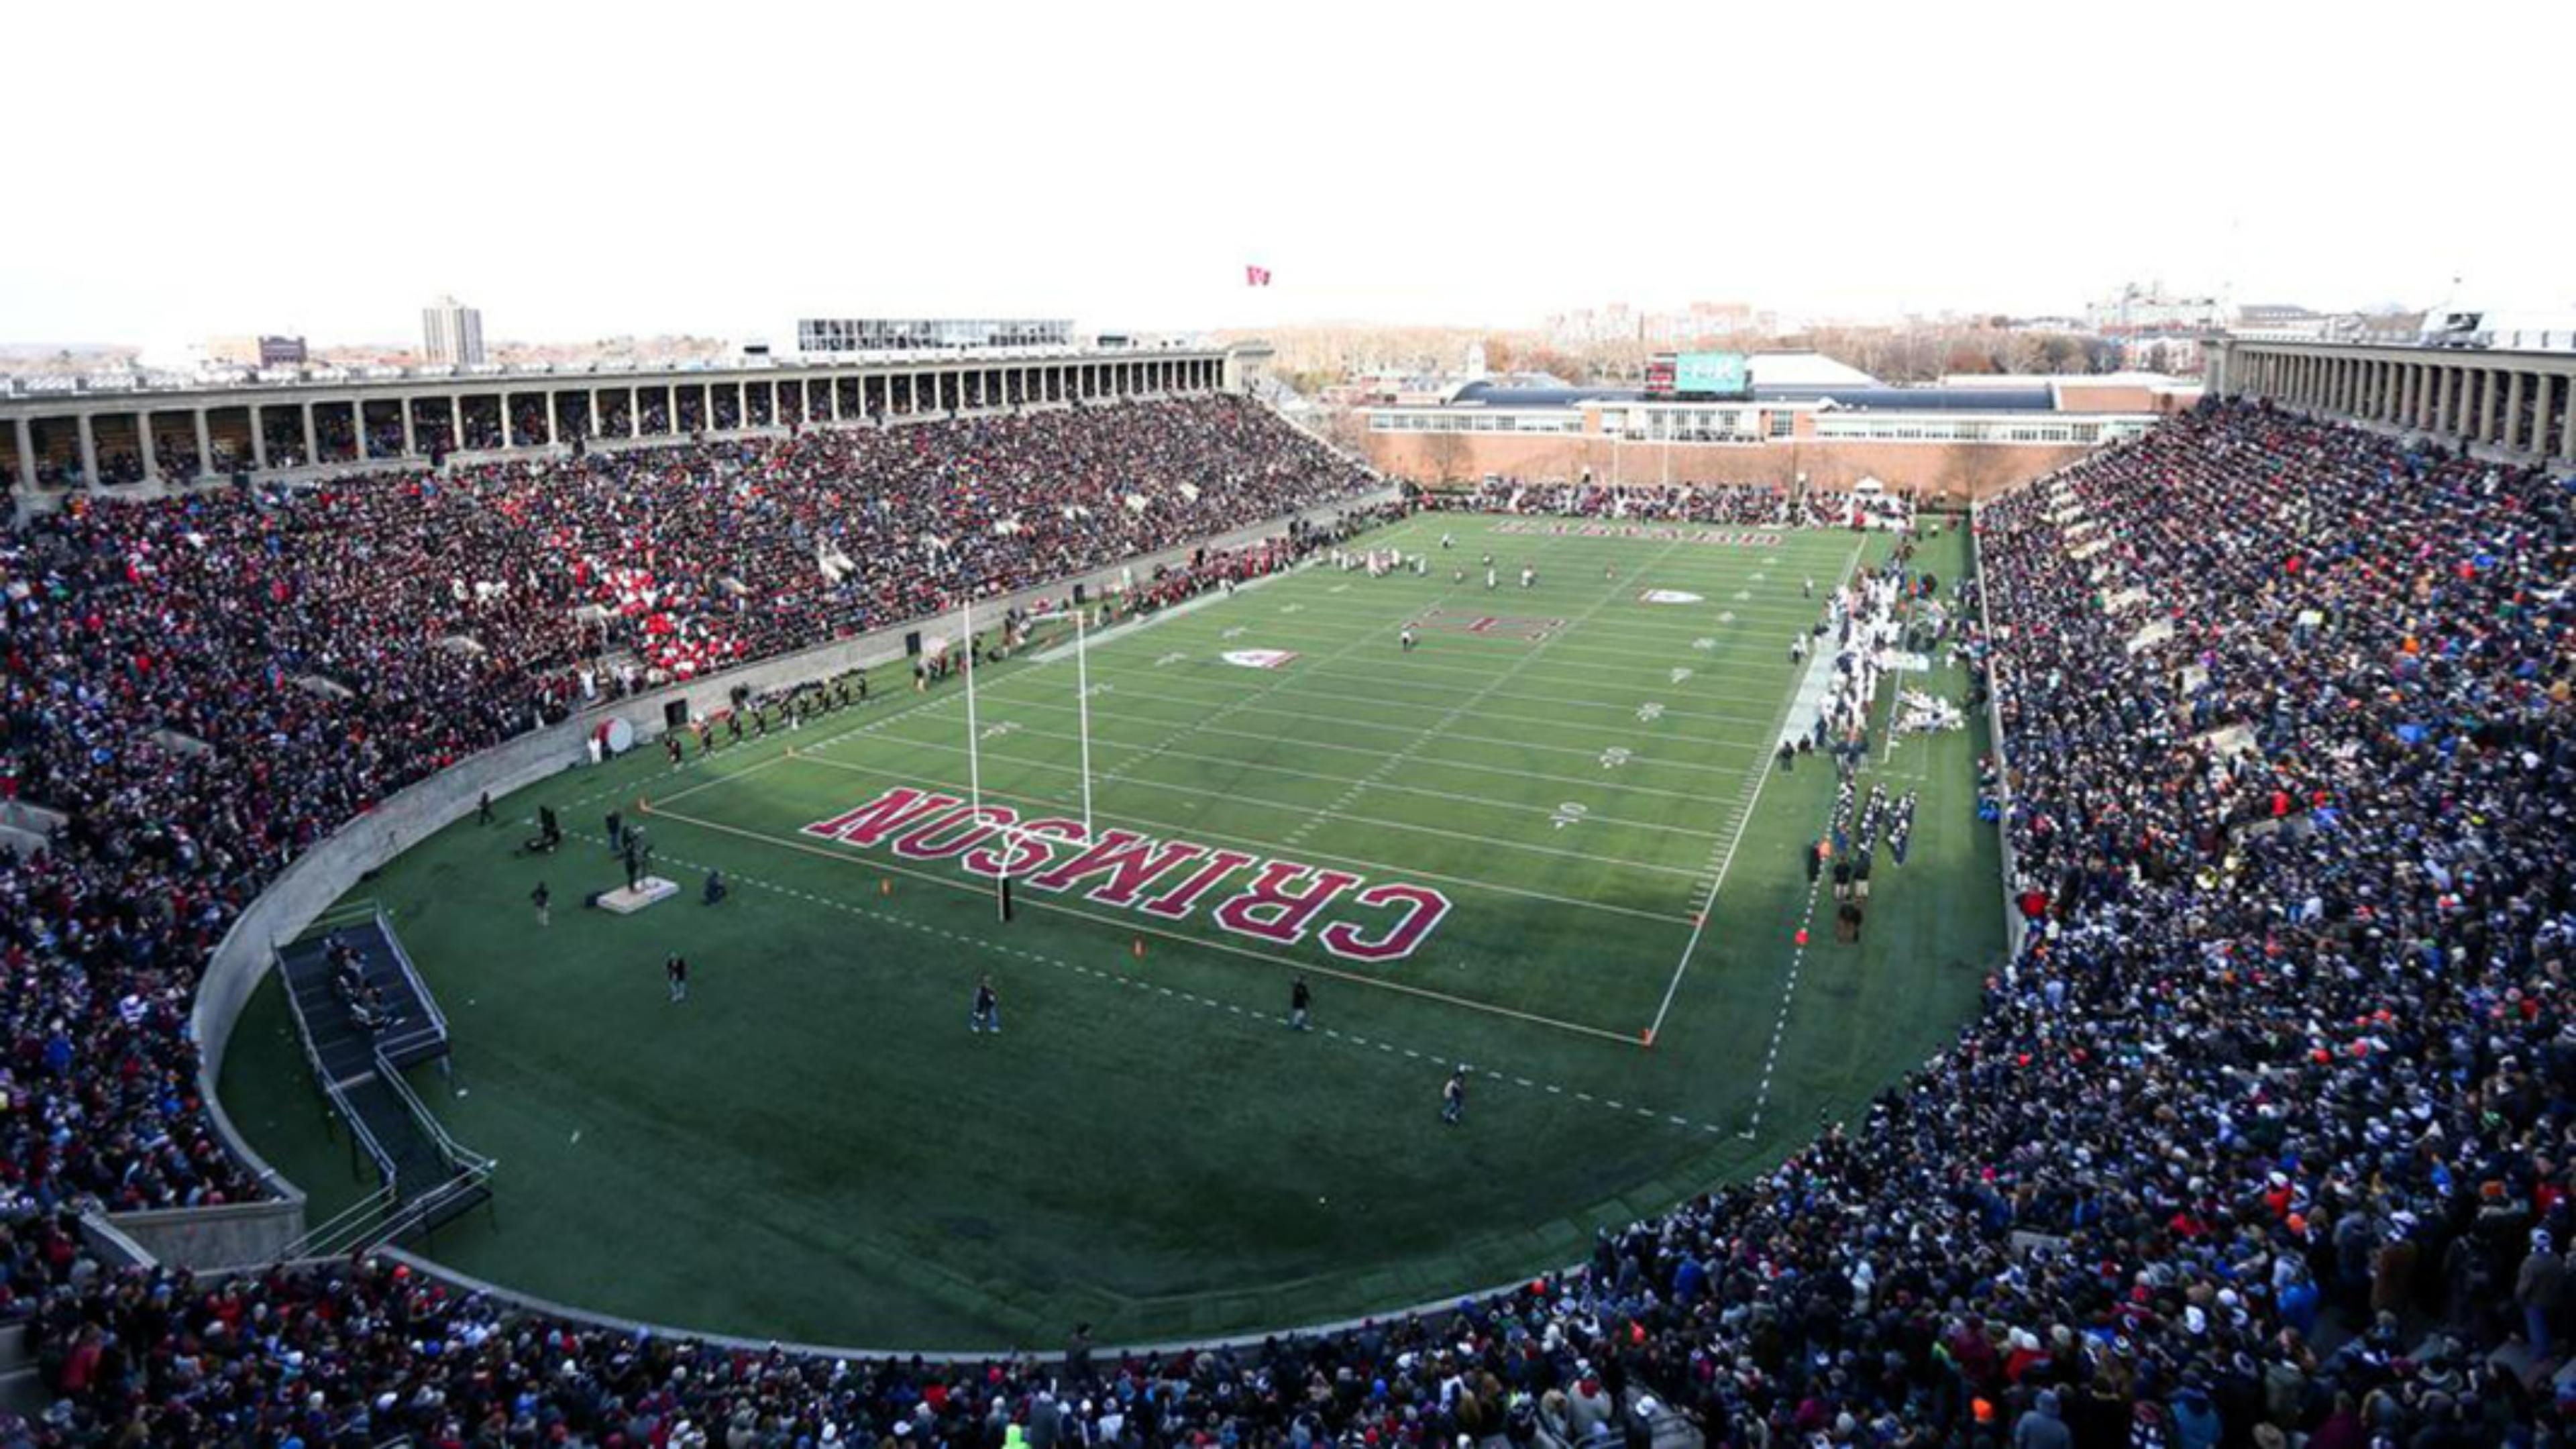 Harvard Stadium